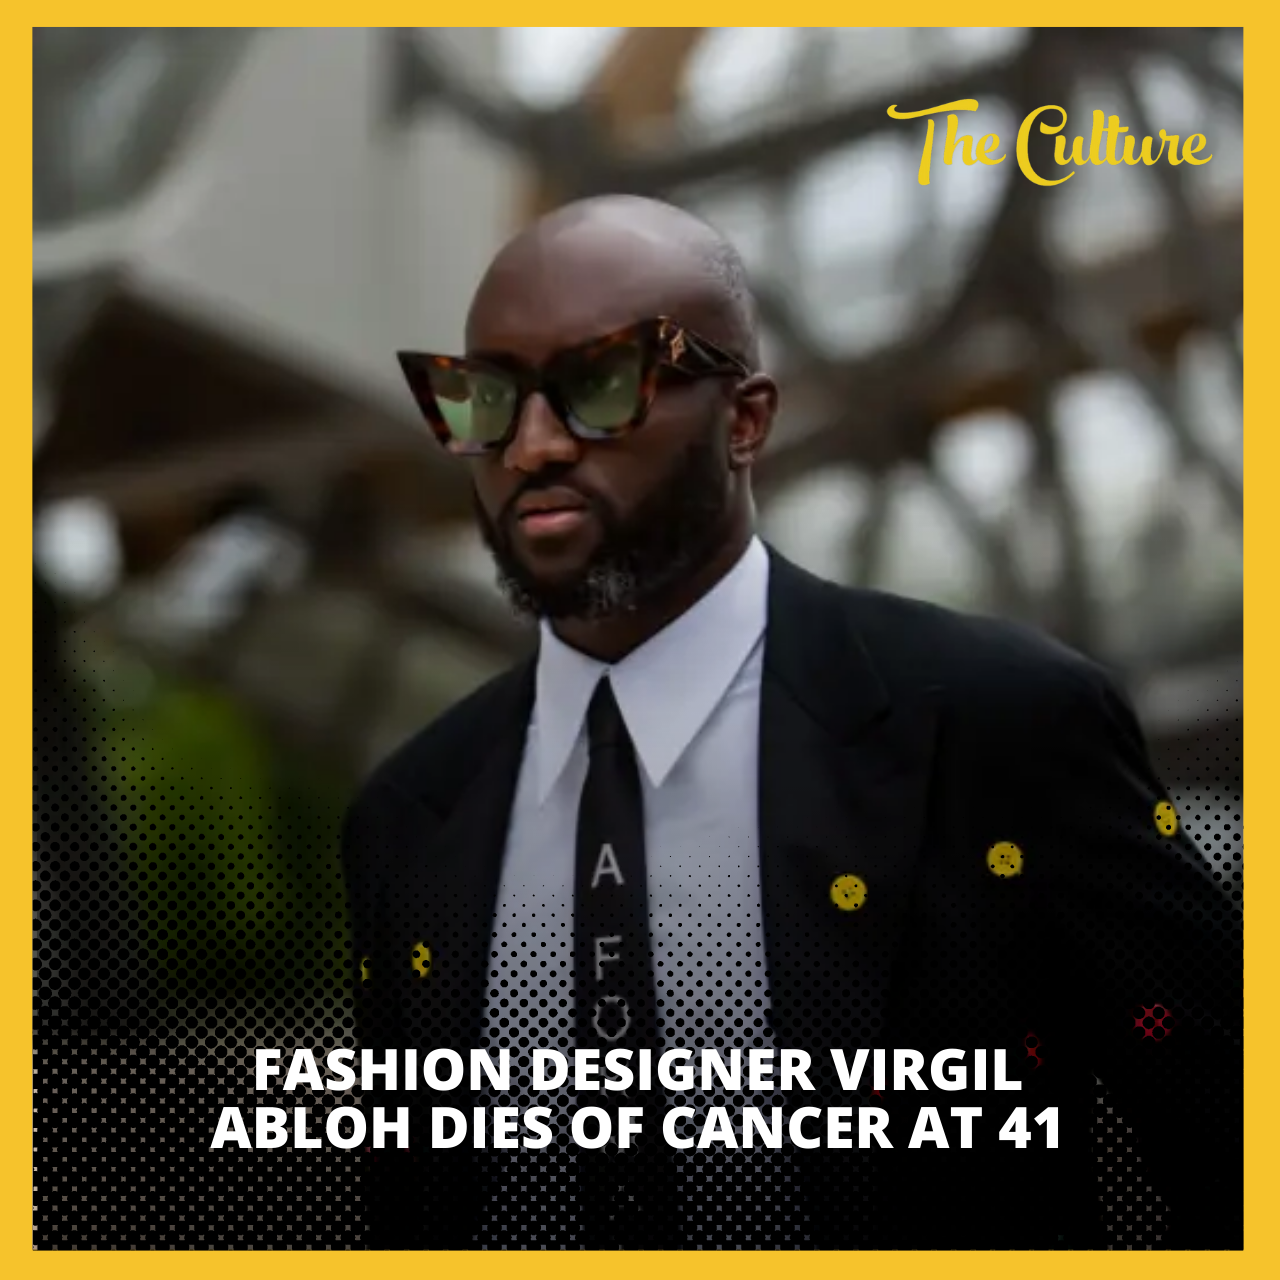 Groundbreaking designer Virgil Abloh dies from cancer aged 41